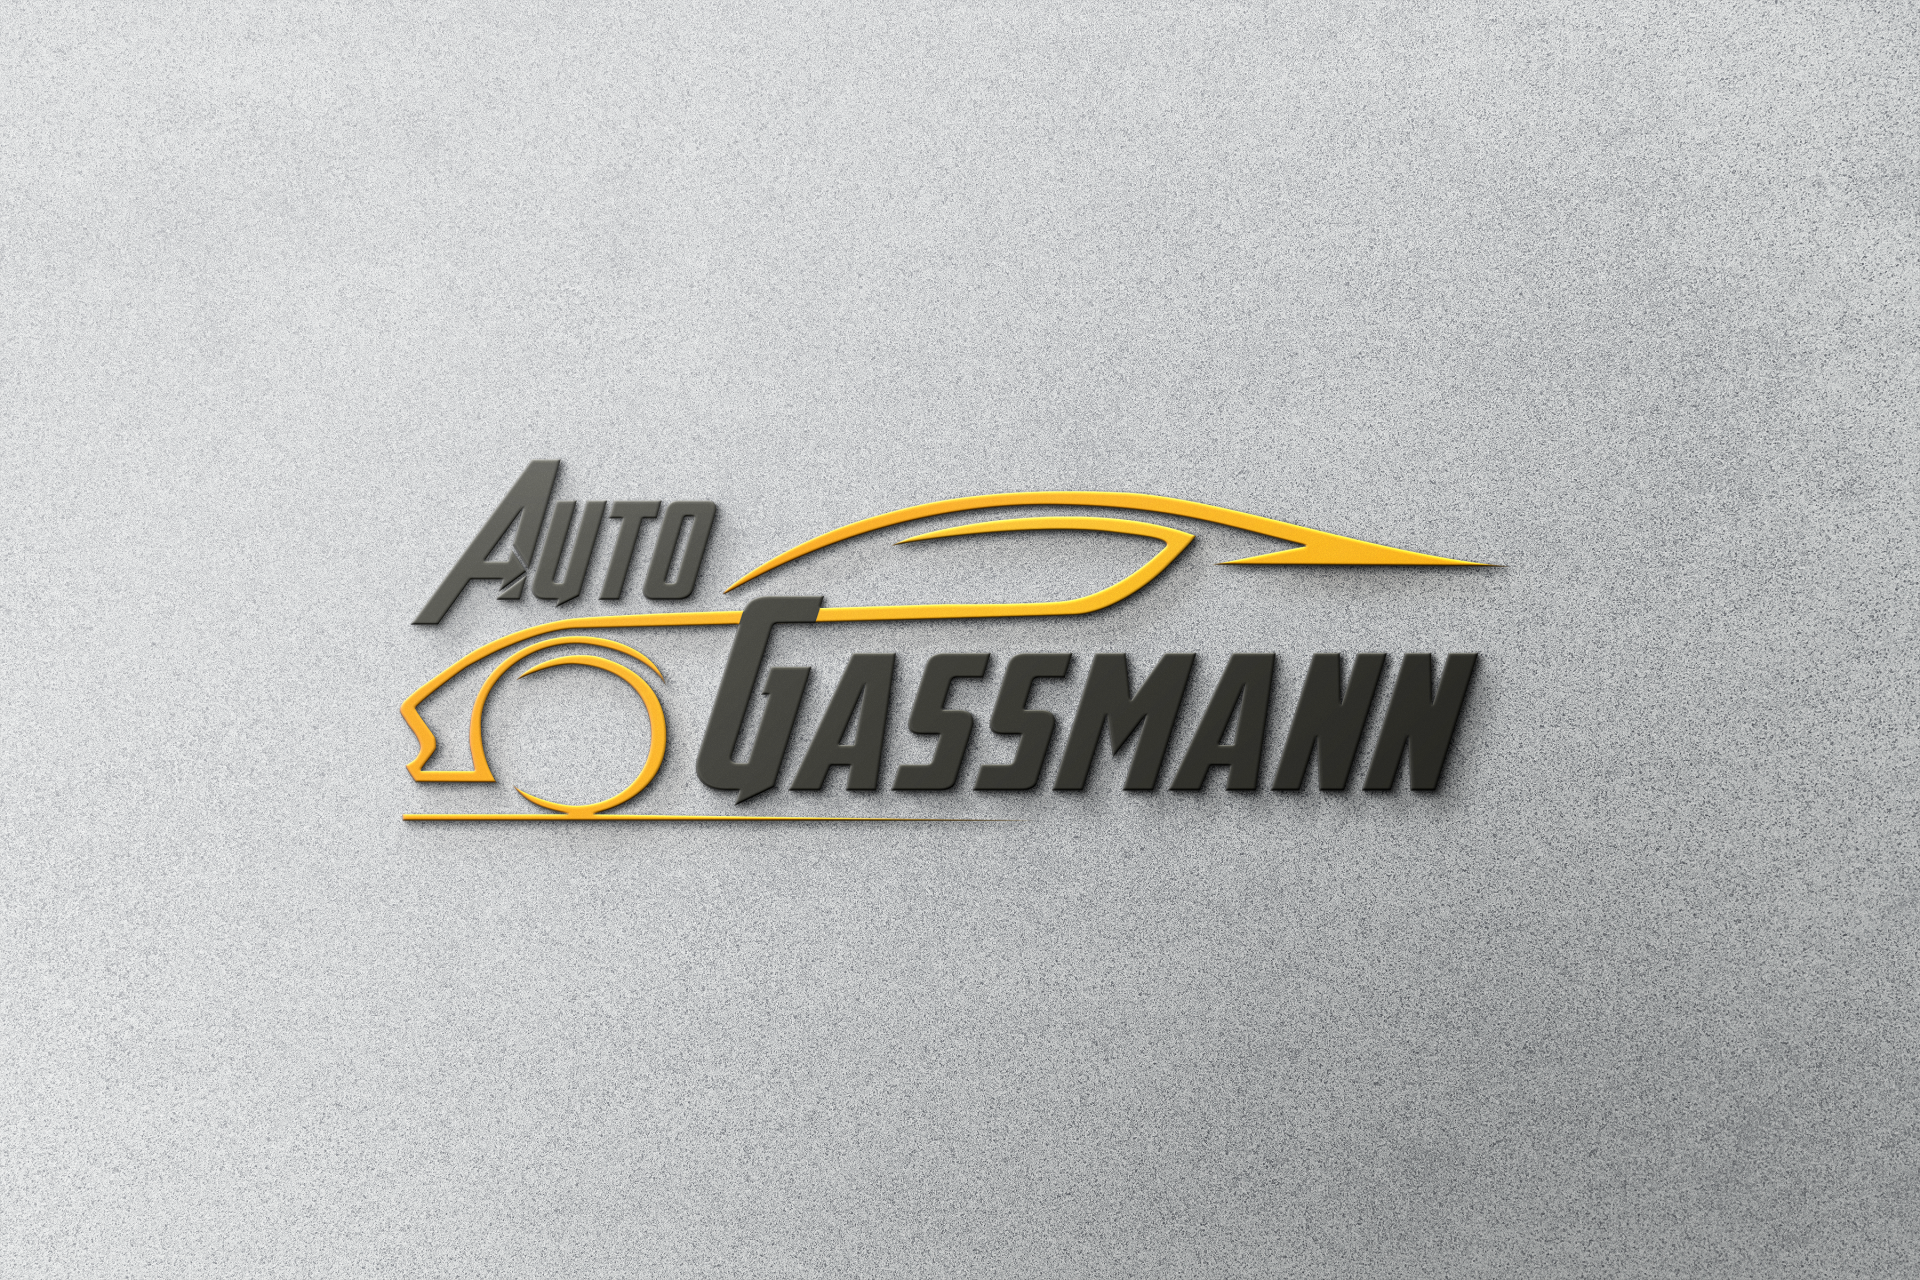 Automobile Gassmann